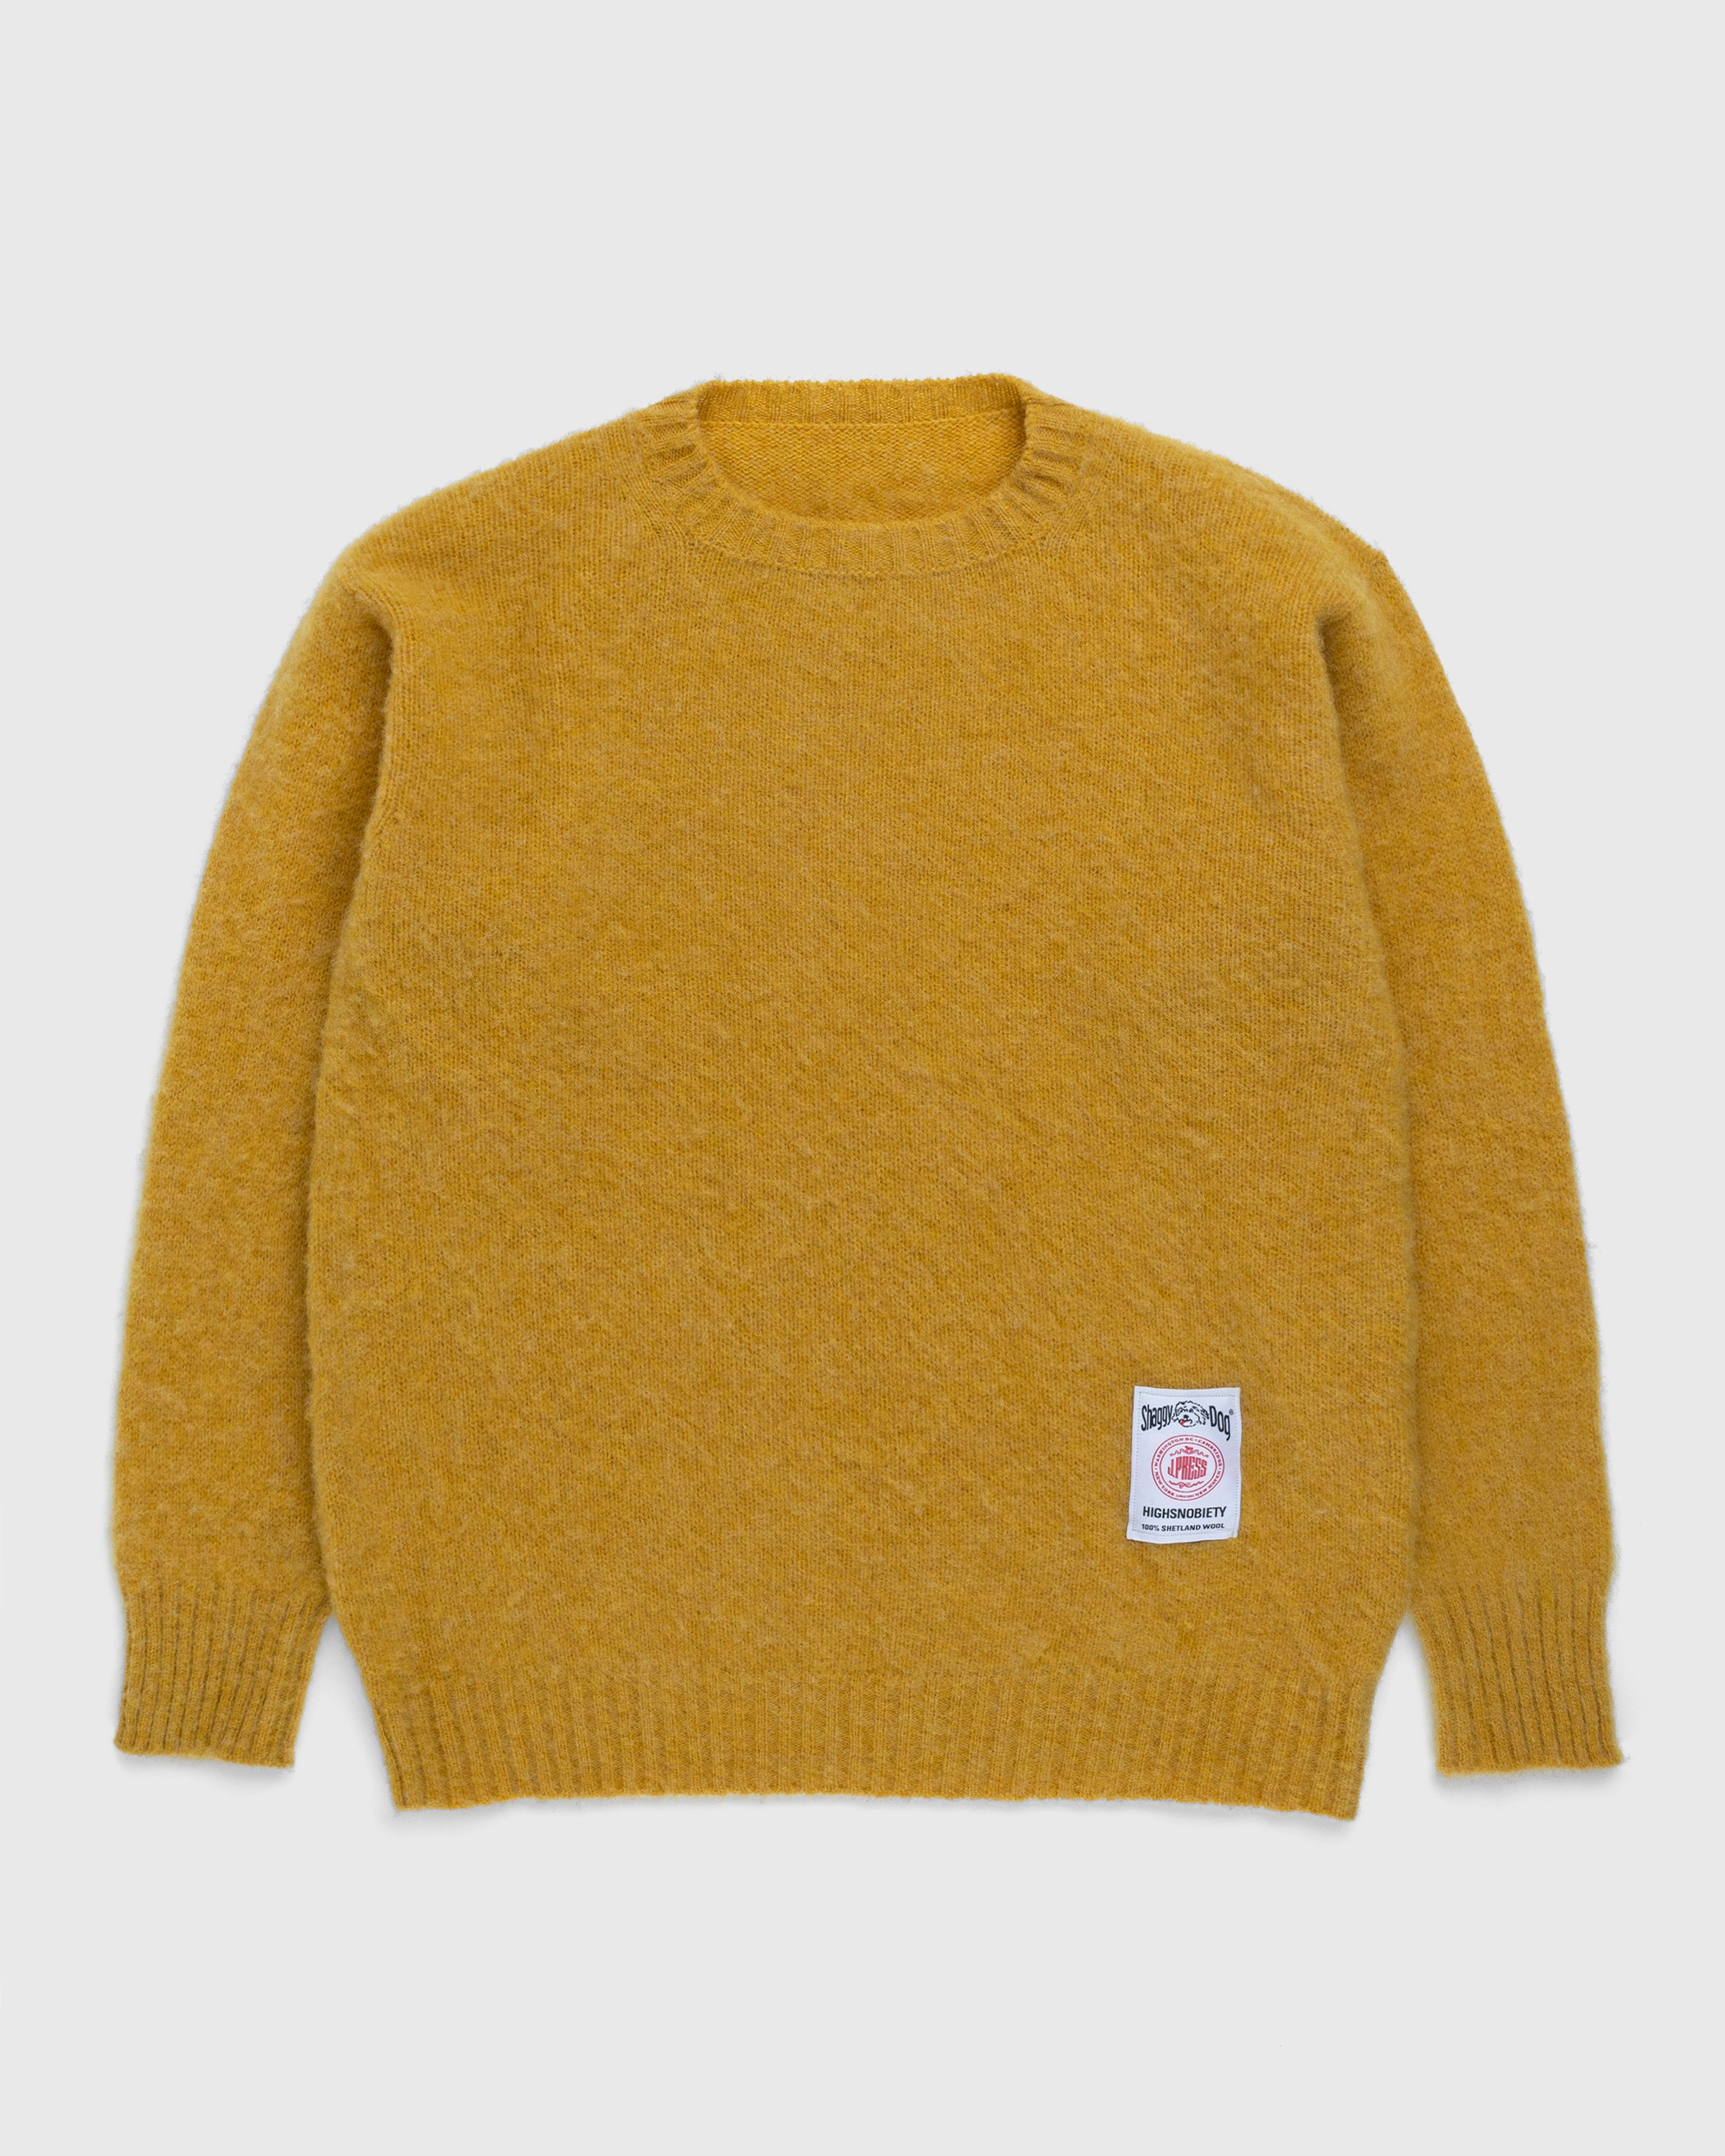 J. Press x Highsnobiety - Shaggy Dog Solid Sweater Yellow - Clothing - Yellow - Image 1